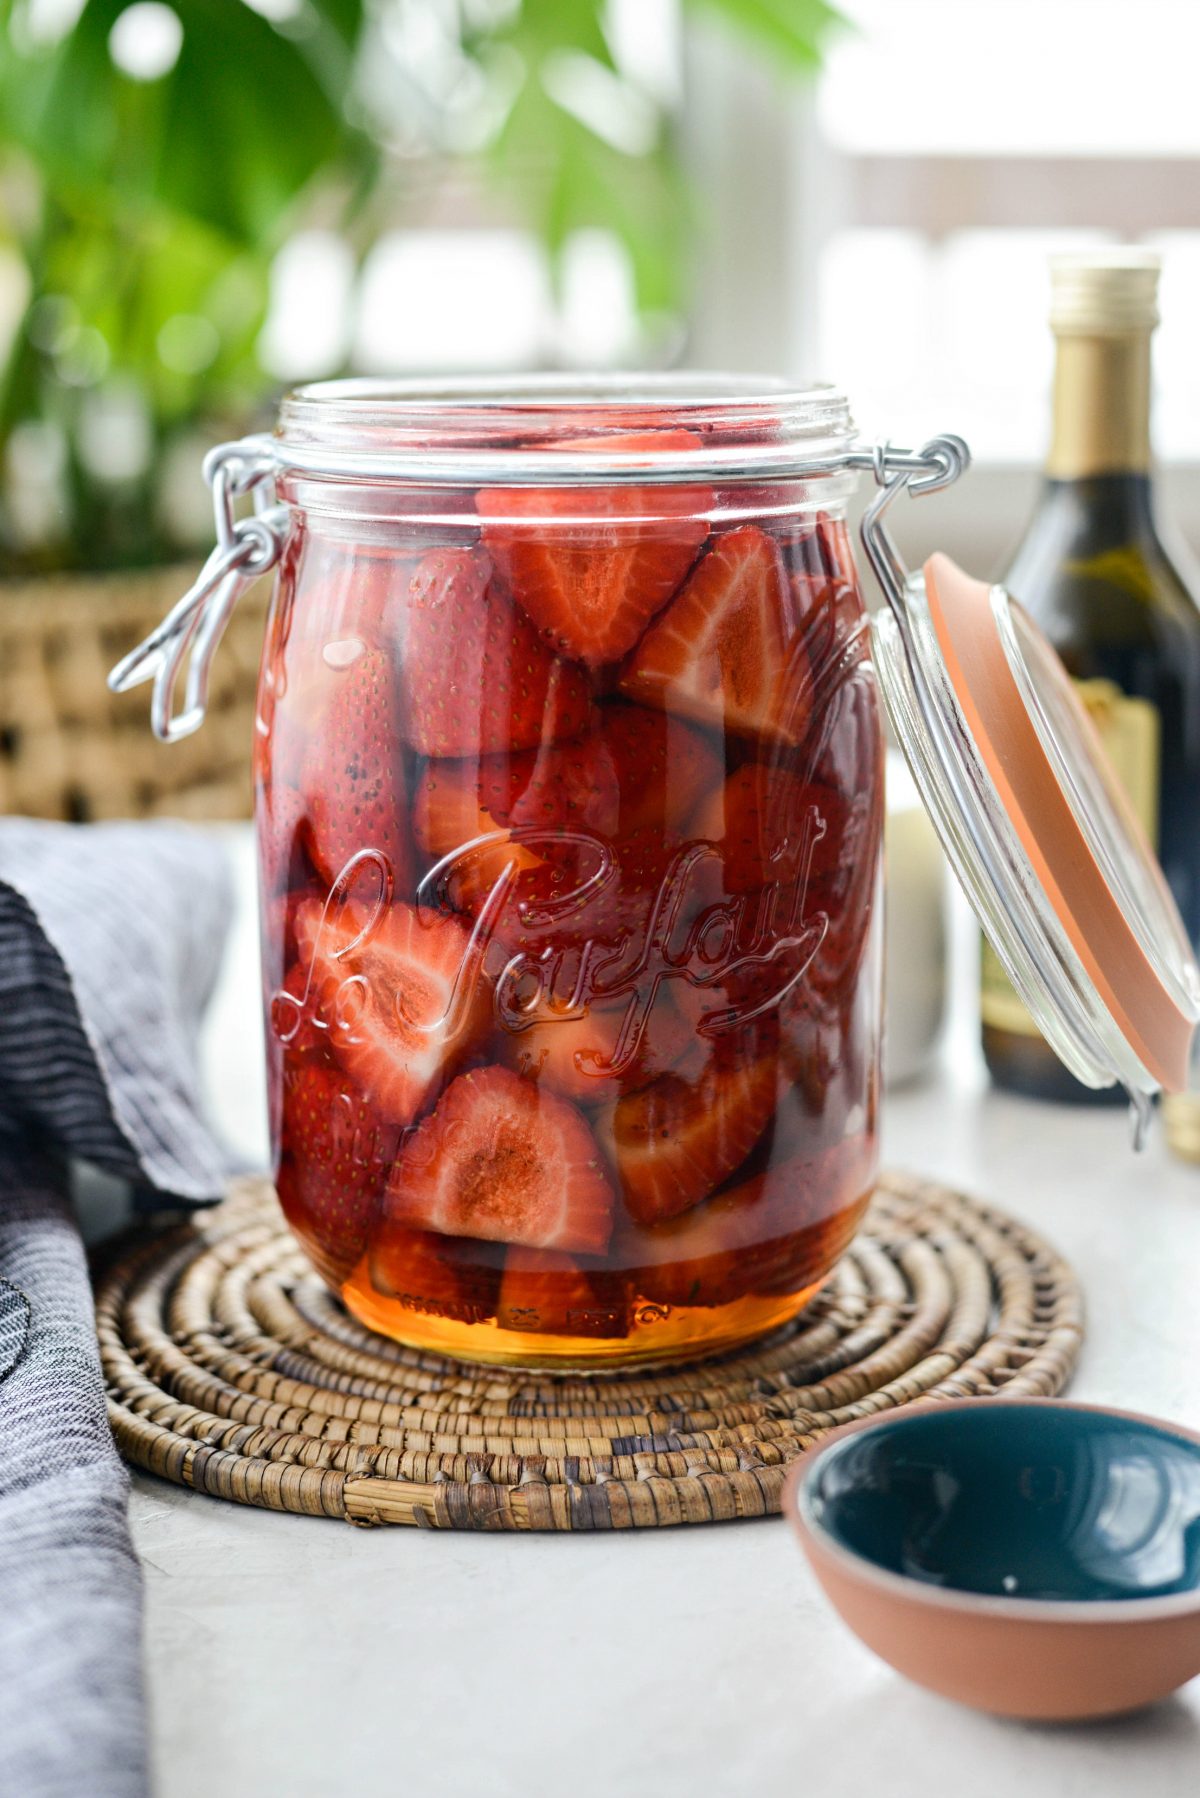 Pickled Strawberries l SimplyScratch.com #homemade #pickled #strawberries #easy #fromscratch #preserving